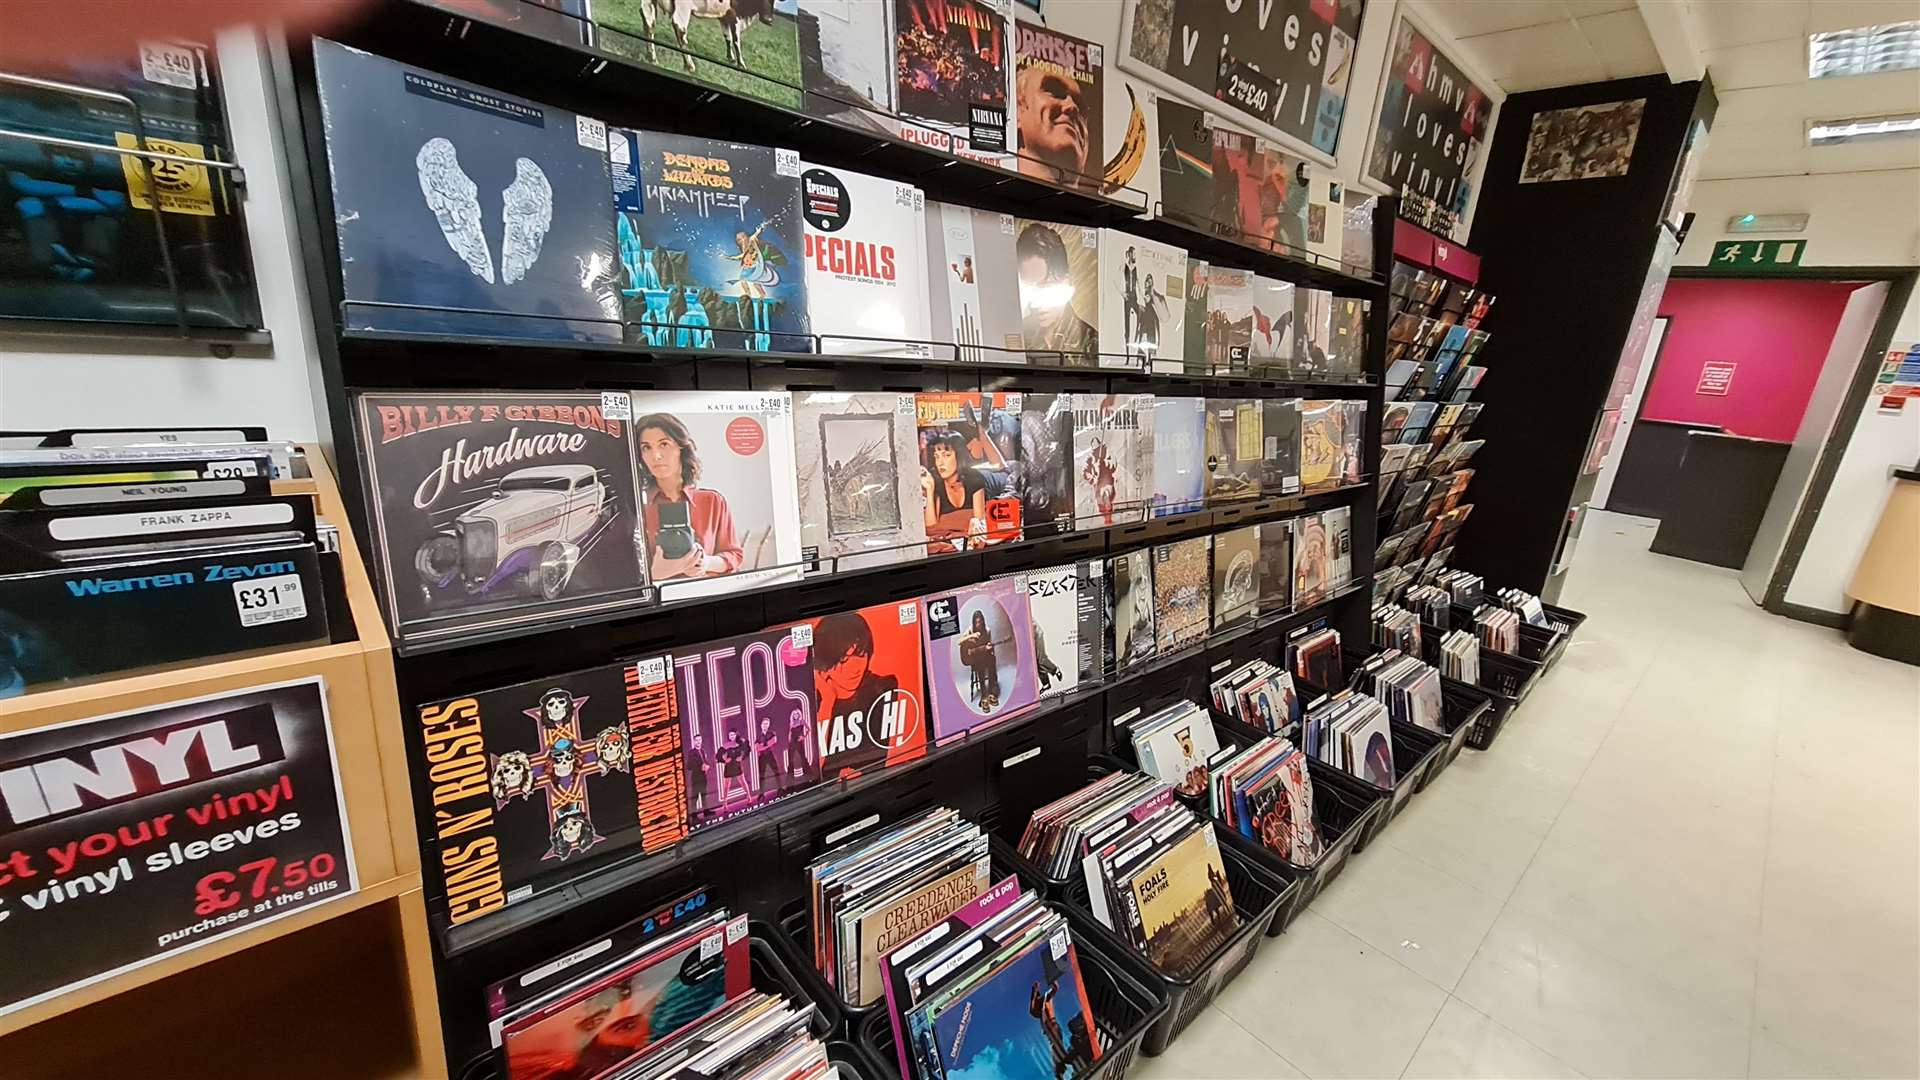 Vinyl records are a growing market at HMV